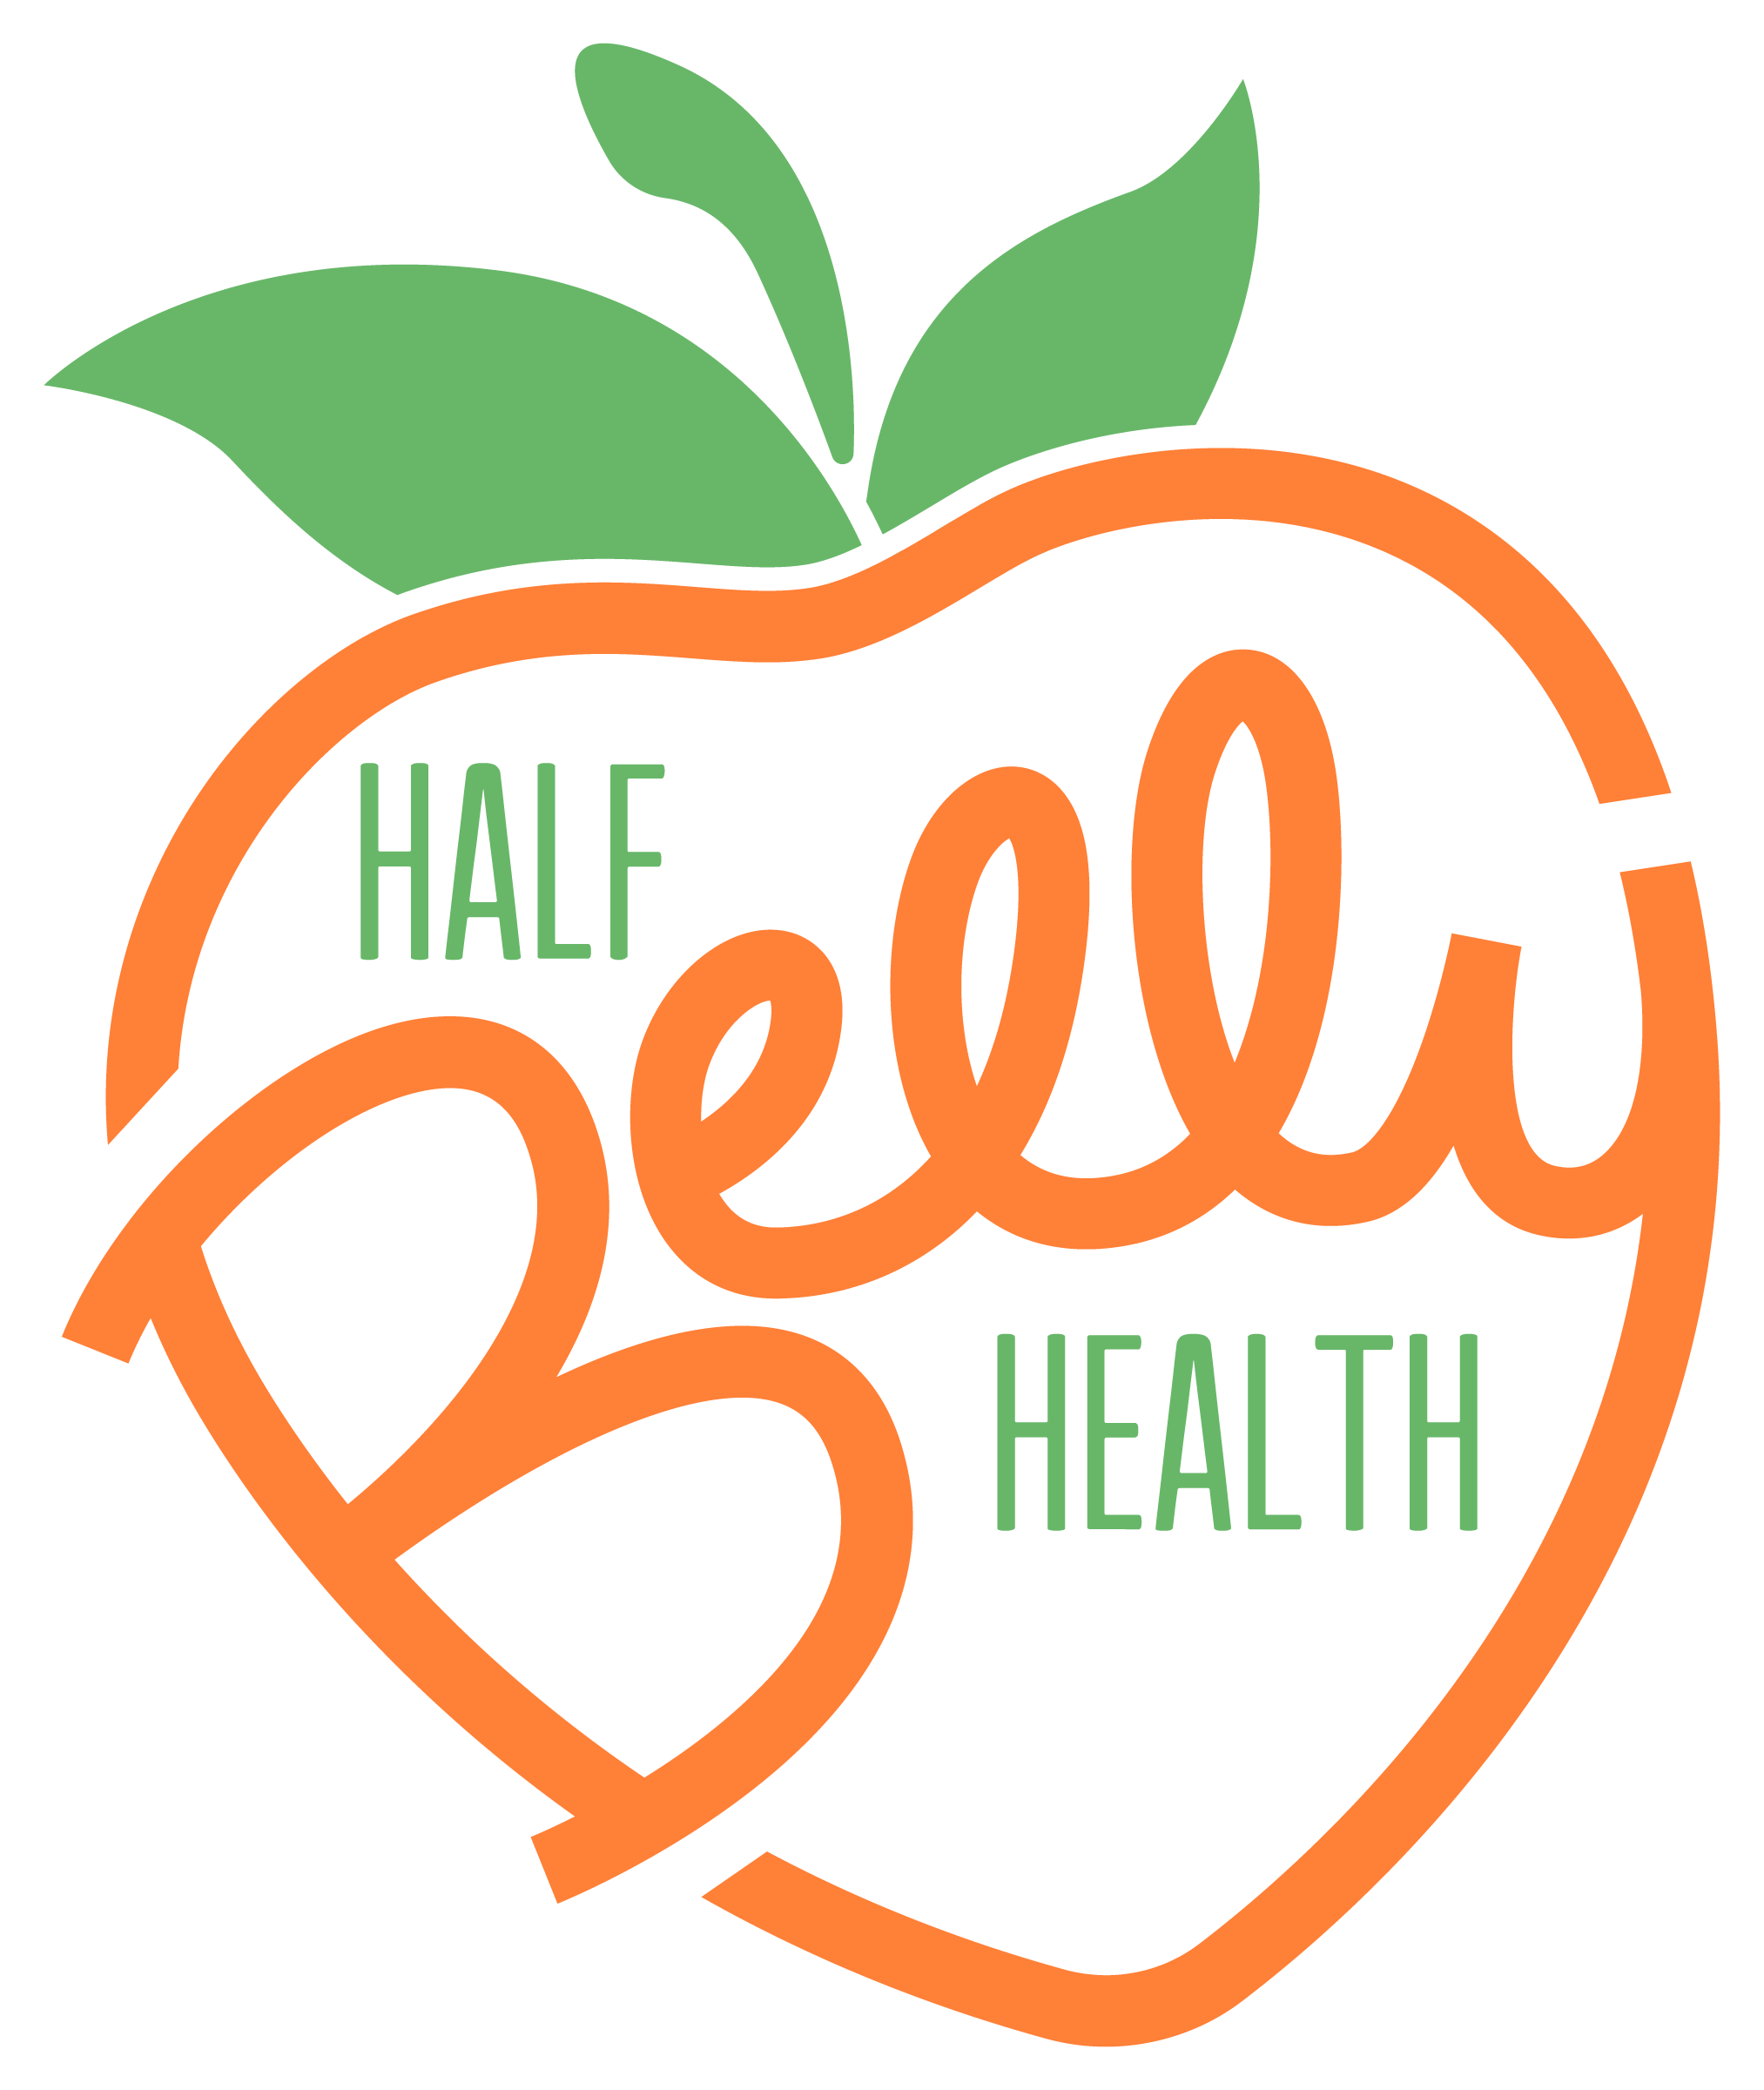 Half Belly Health